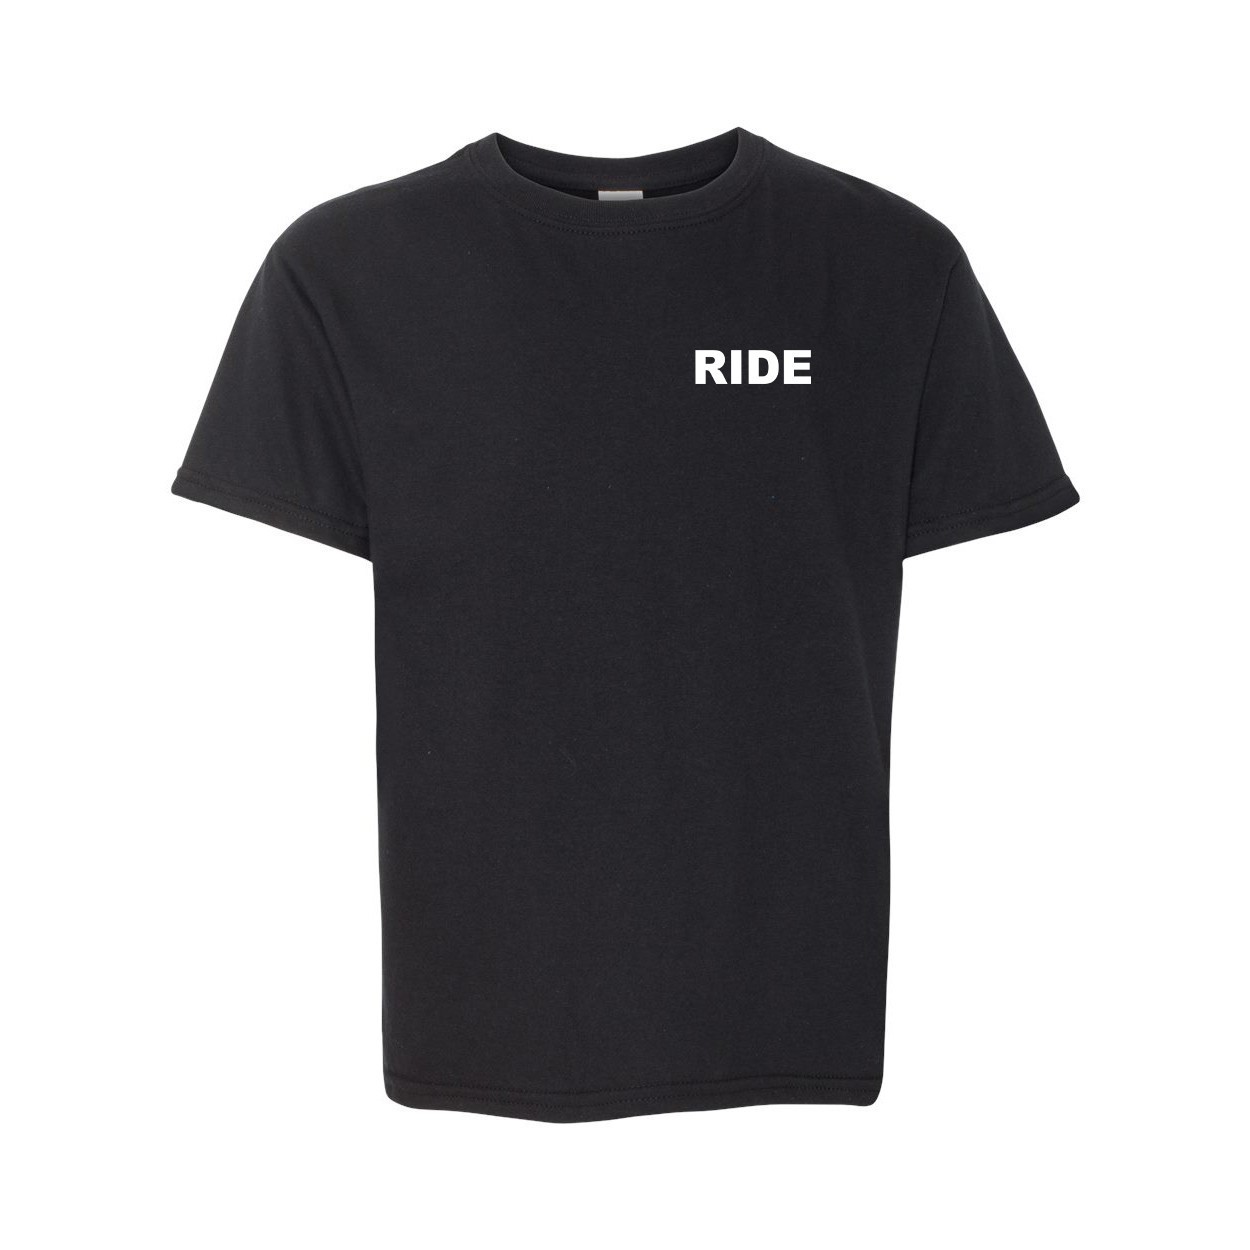 Ride Brand Logo Night Out Youth T-Shirt Black (White Logo)